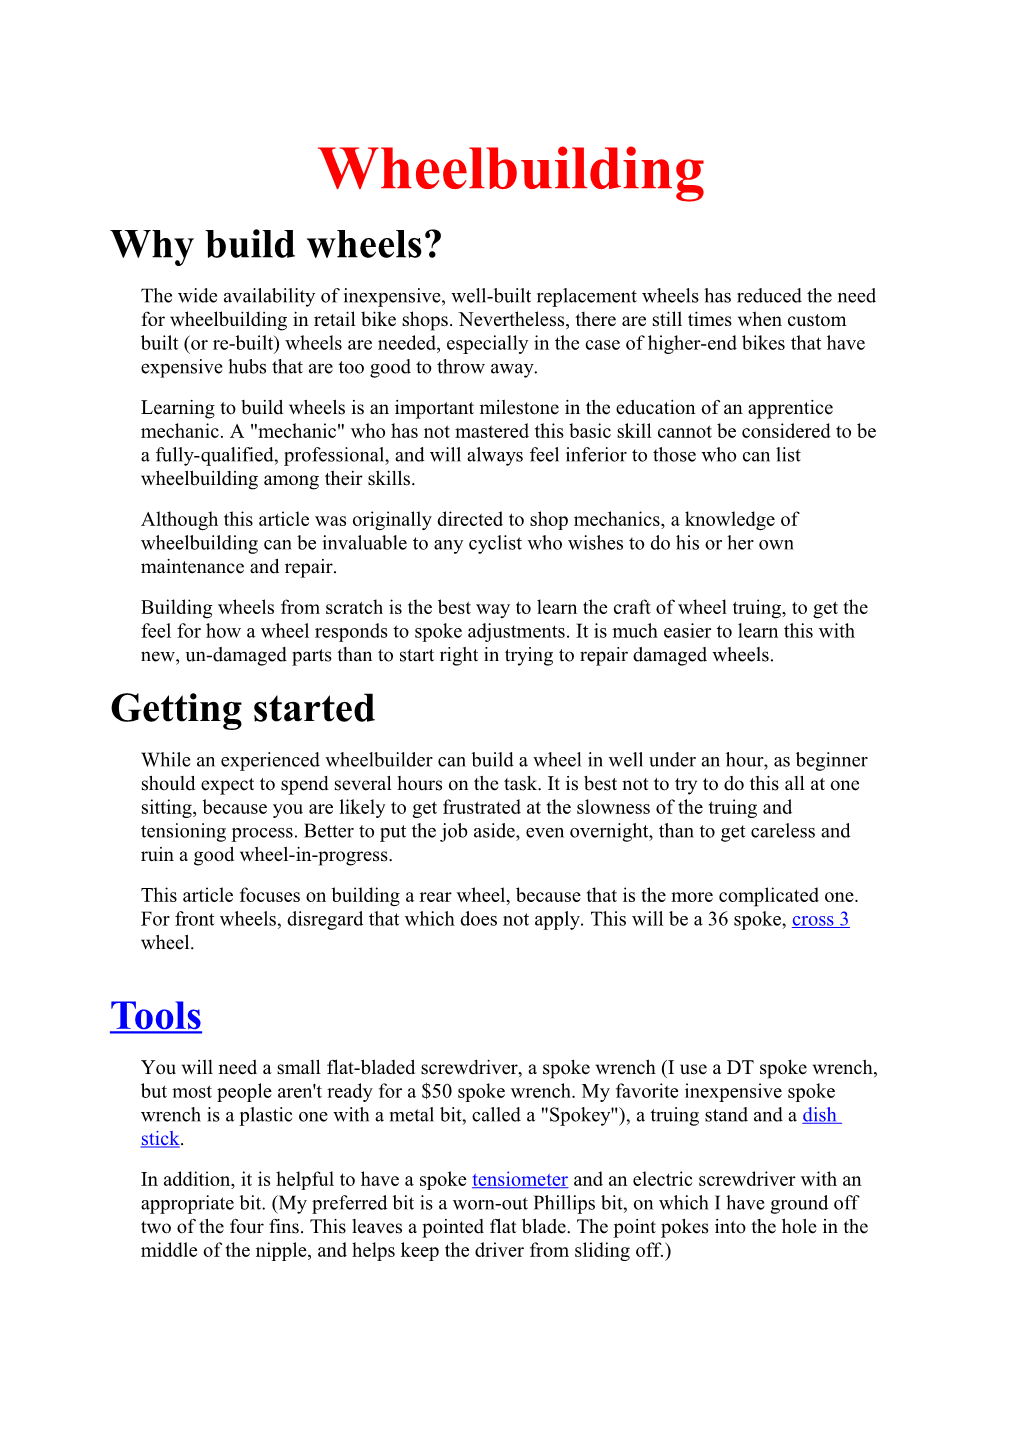 Why Build Wheels?